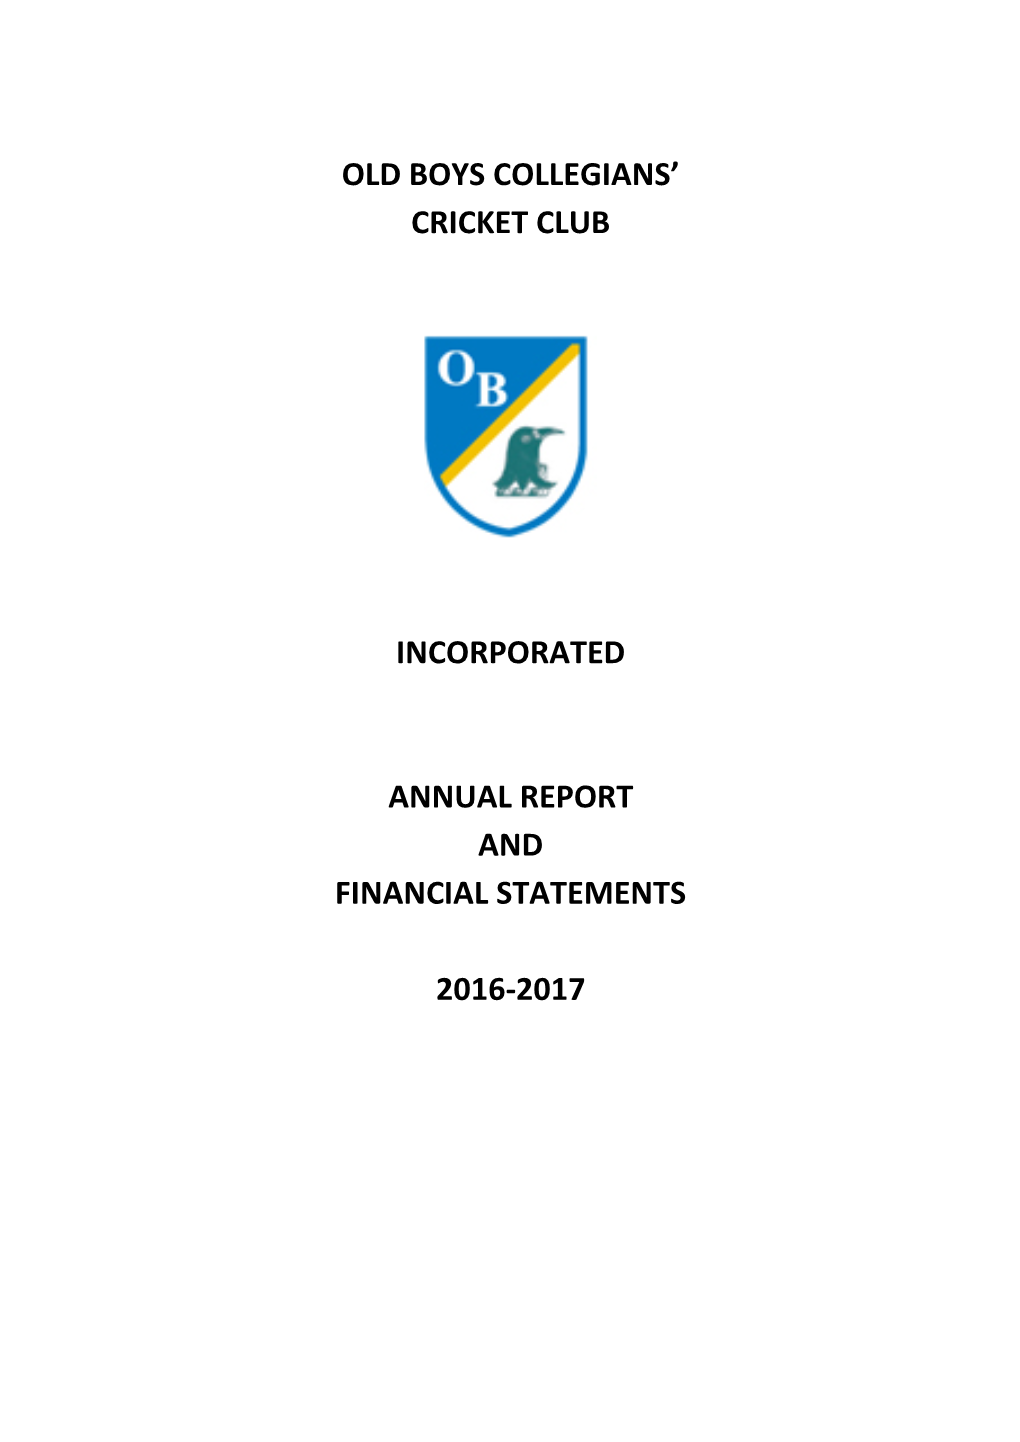 OBC Annual Report 2012-2013